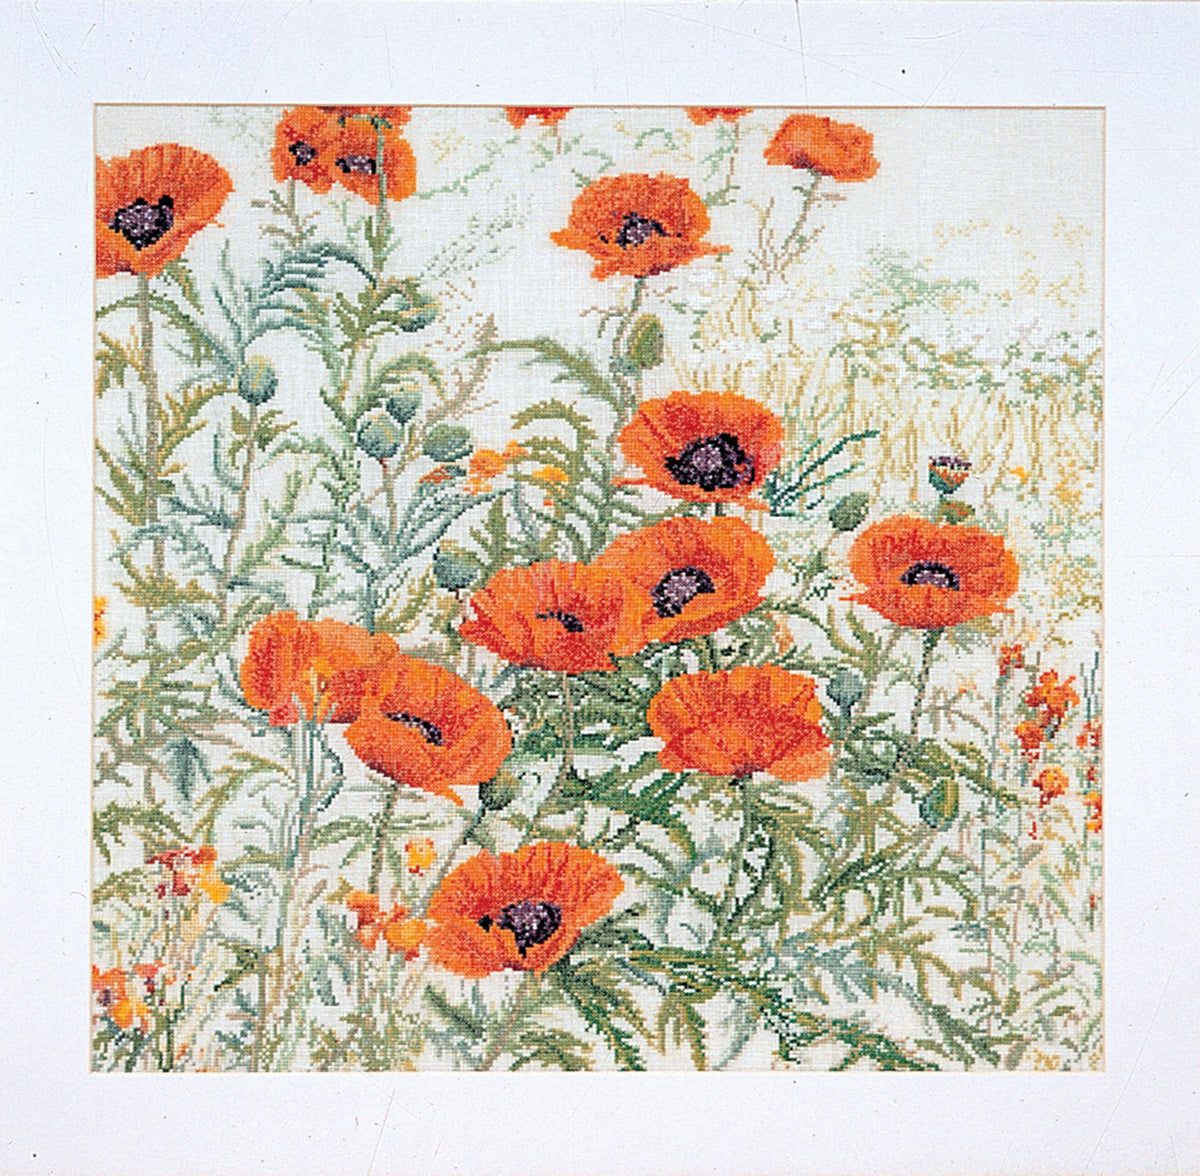 Thea Gouverneur - Counted Cross Stitch Kit - Orange Poppies - Linen - 32 count - 2062 - Thea Gouverneur Since 1959